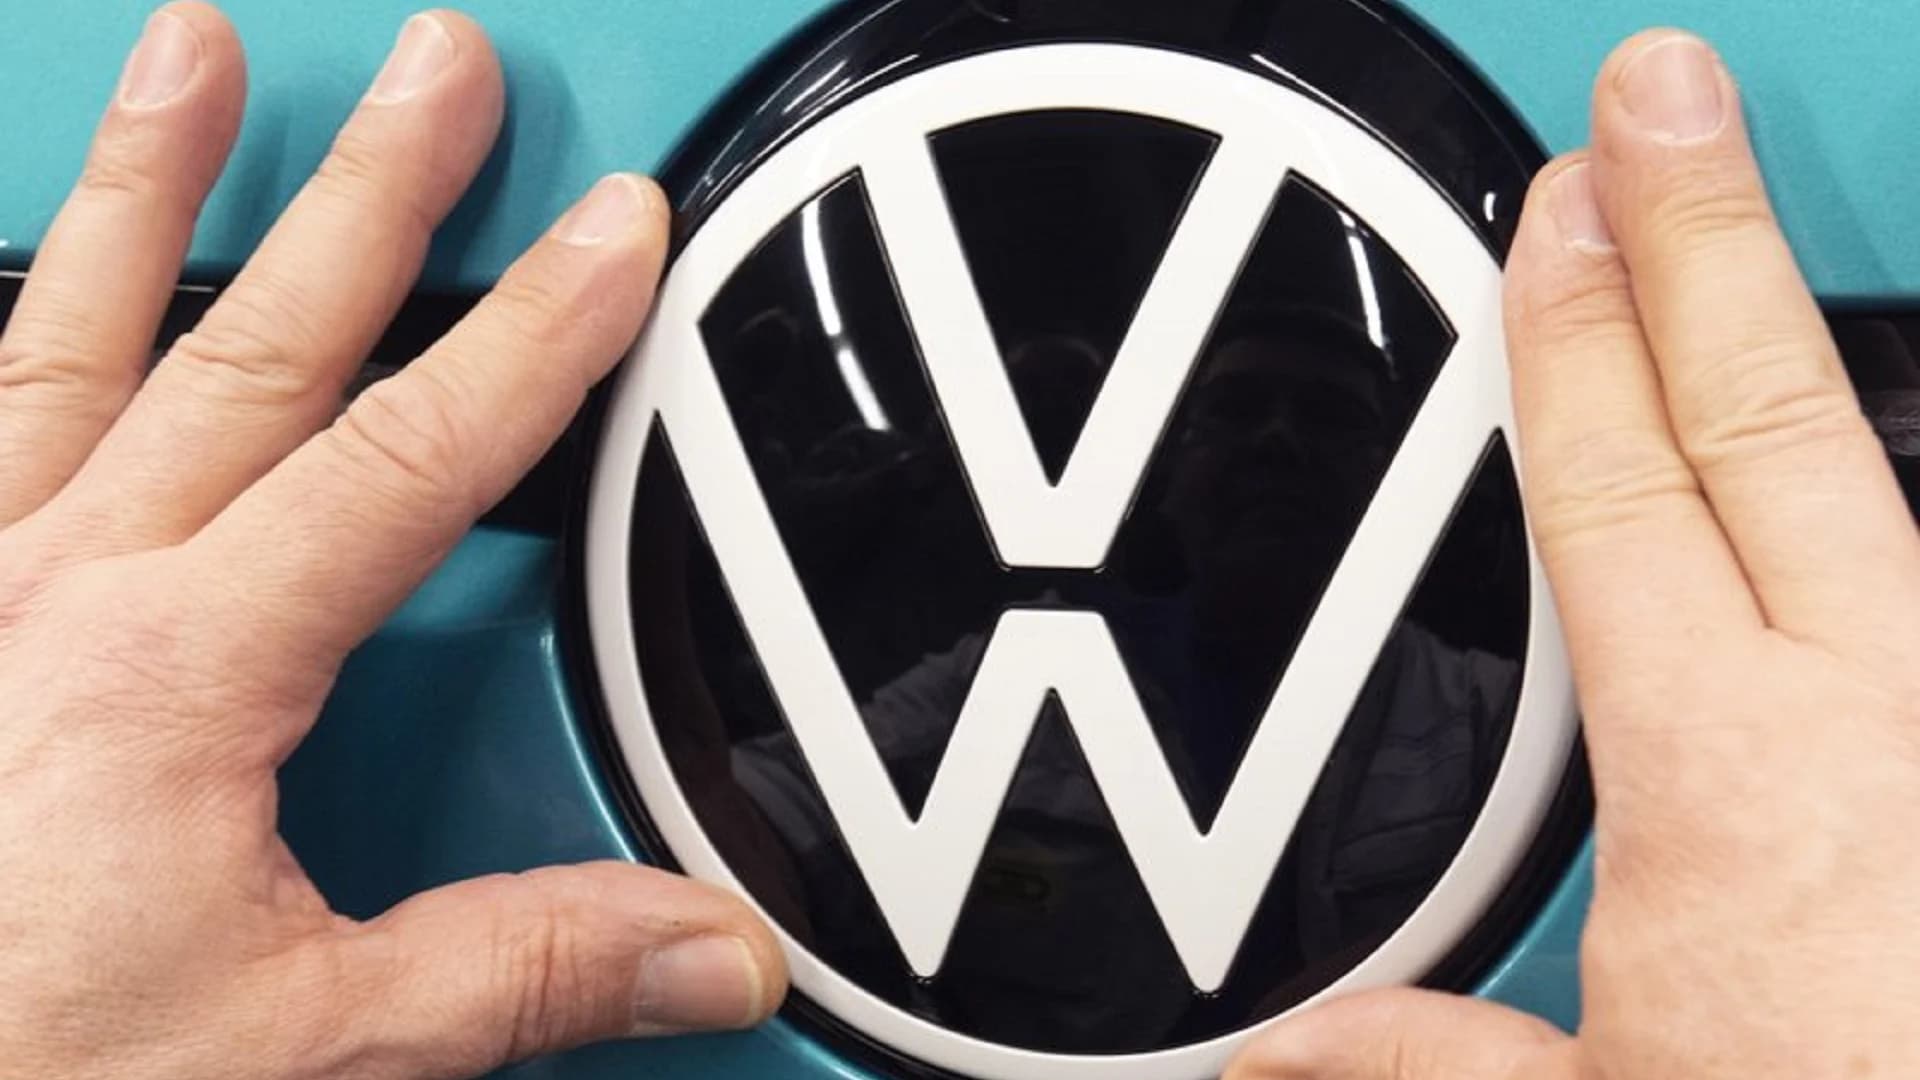 Volkswagen backtracks on 'Voltswagen' name change, saying it was a joke